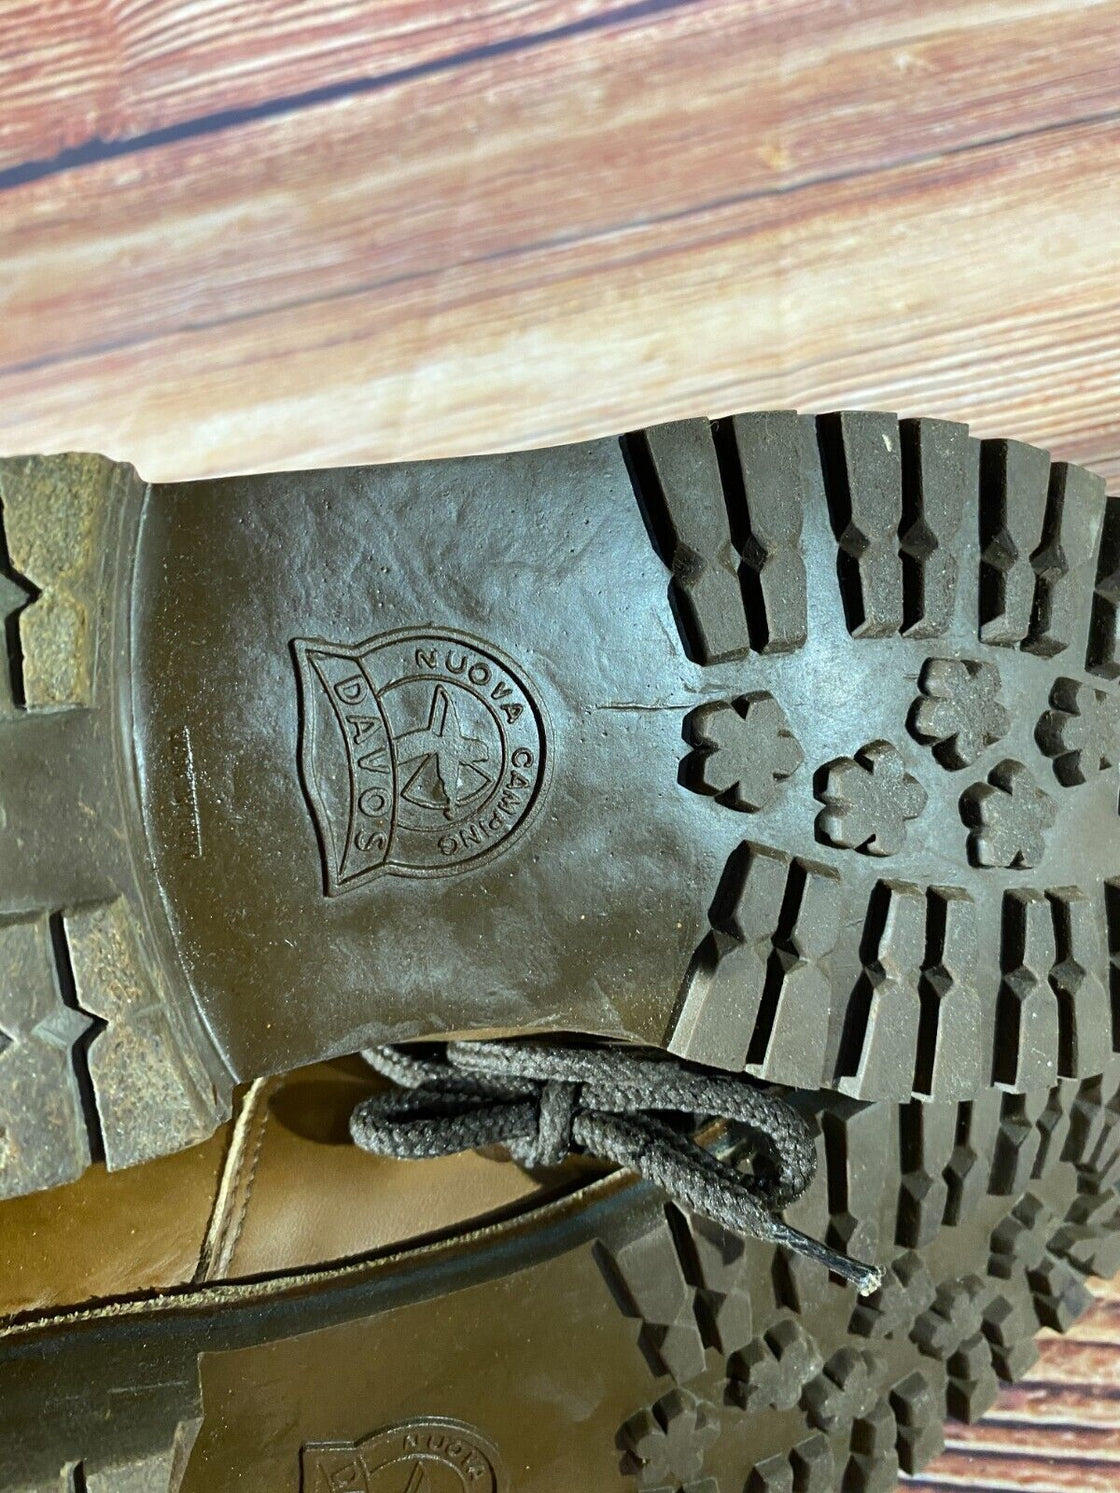 DAVOS Hiking Boots Trekking Trails Leather Shoes Unisex Size EU44, US10, UK9